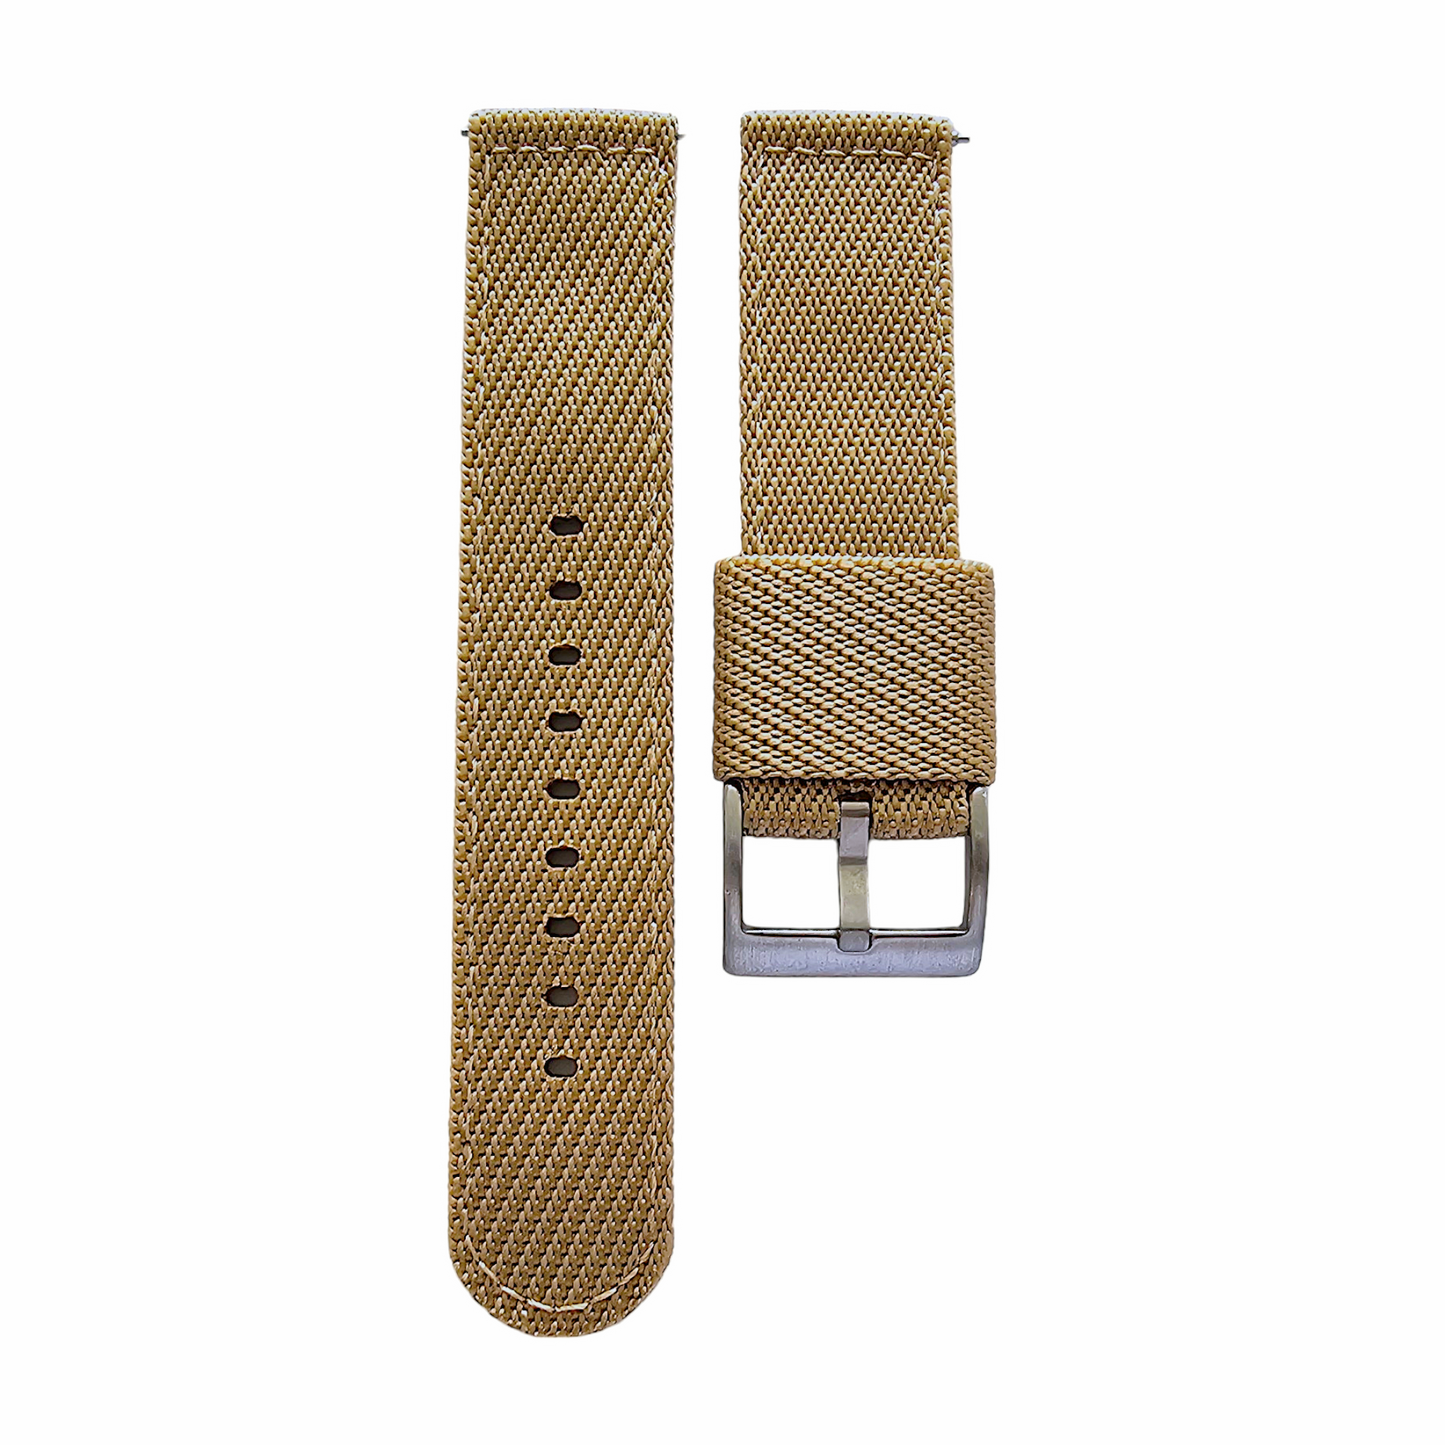 Two Piece NATO Nylon Watch Strap Band Premium G10 MOD Military Mens 20mm 22mm UK